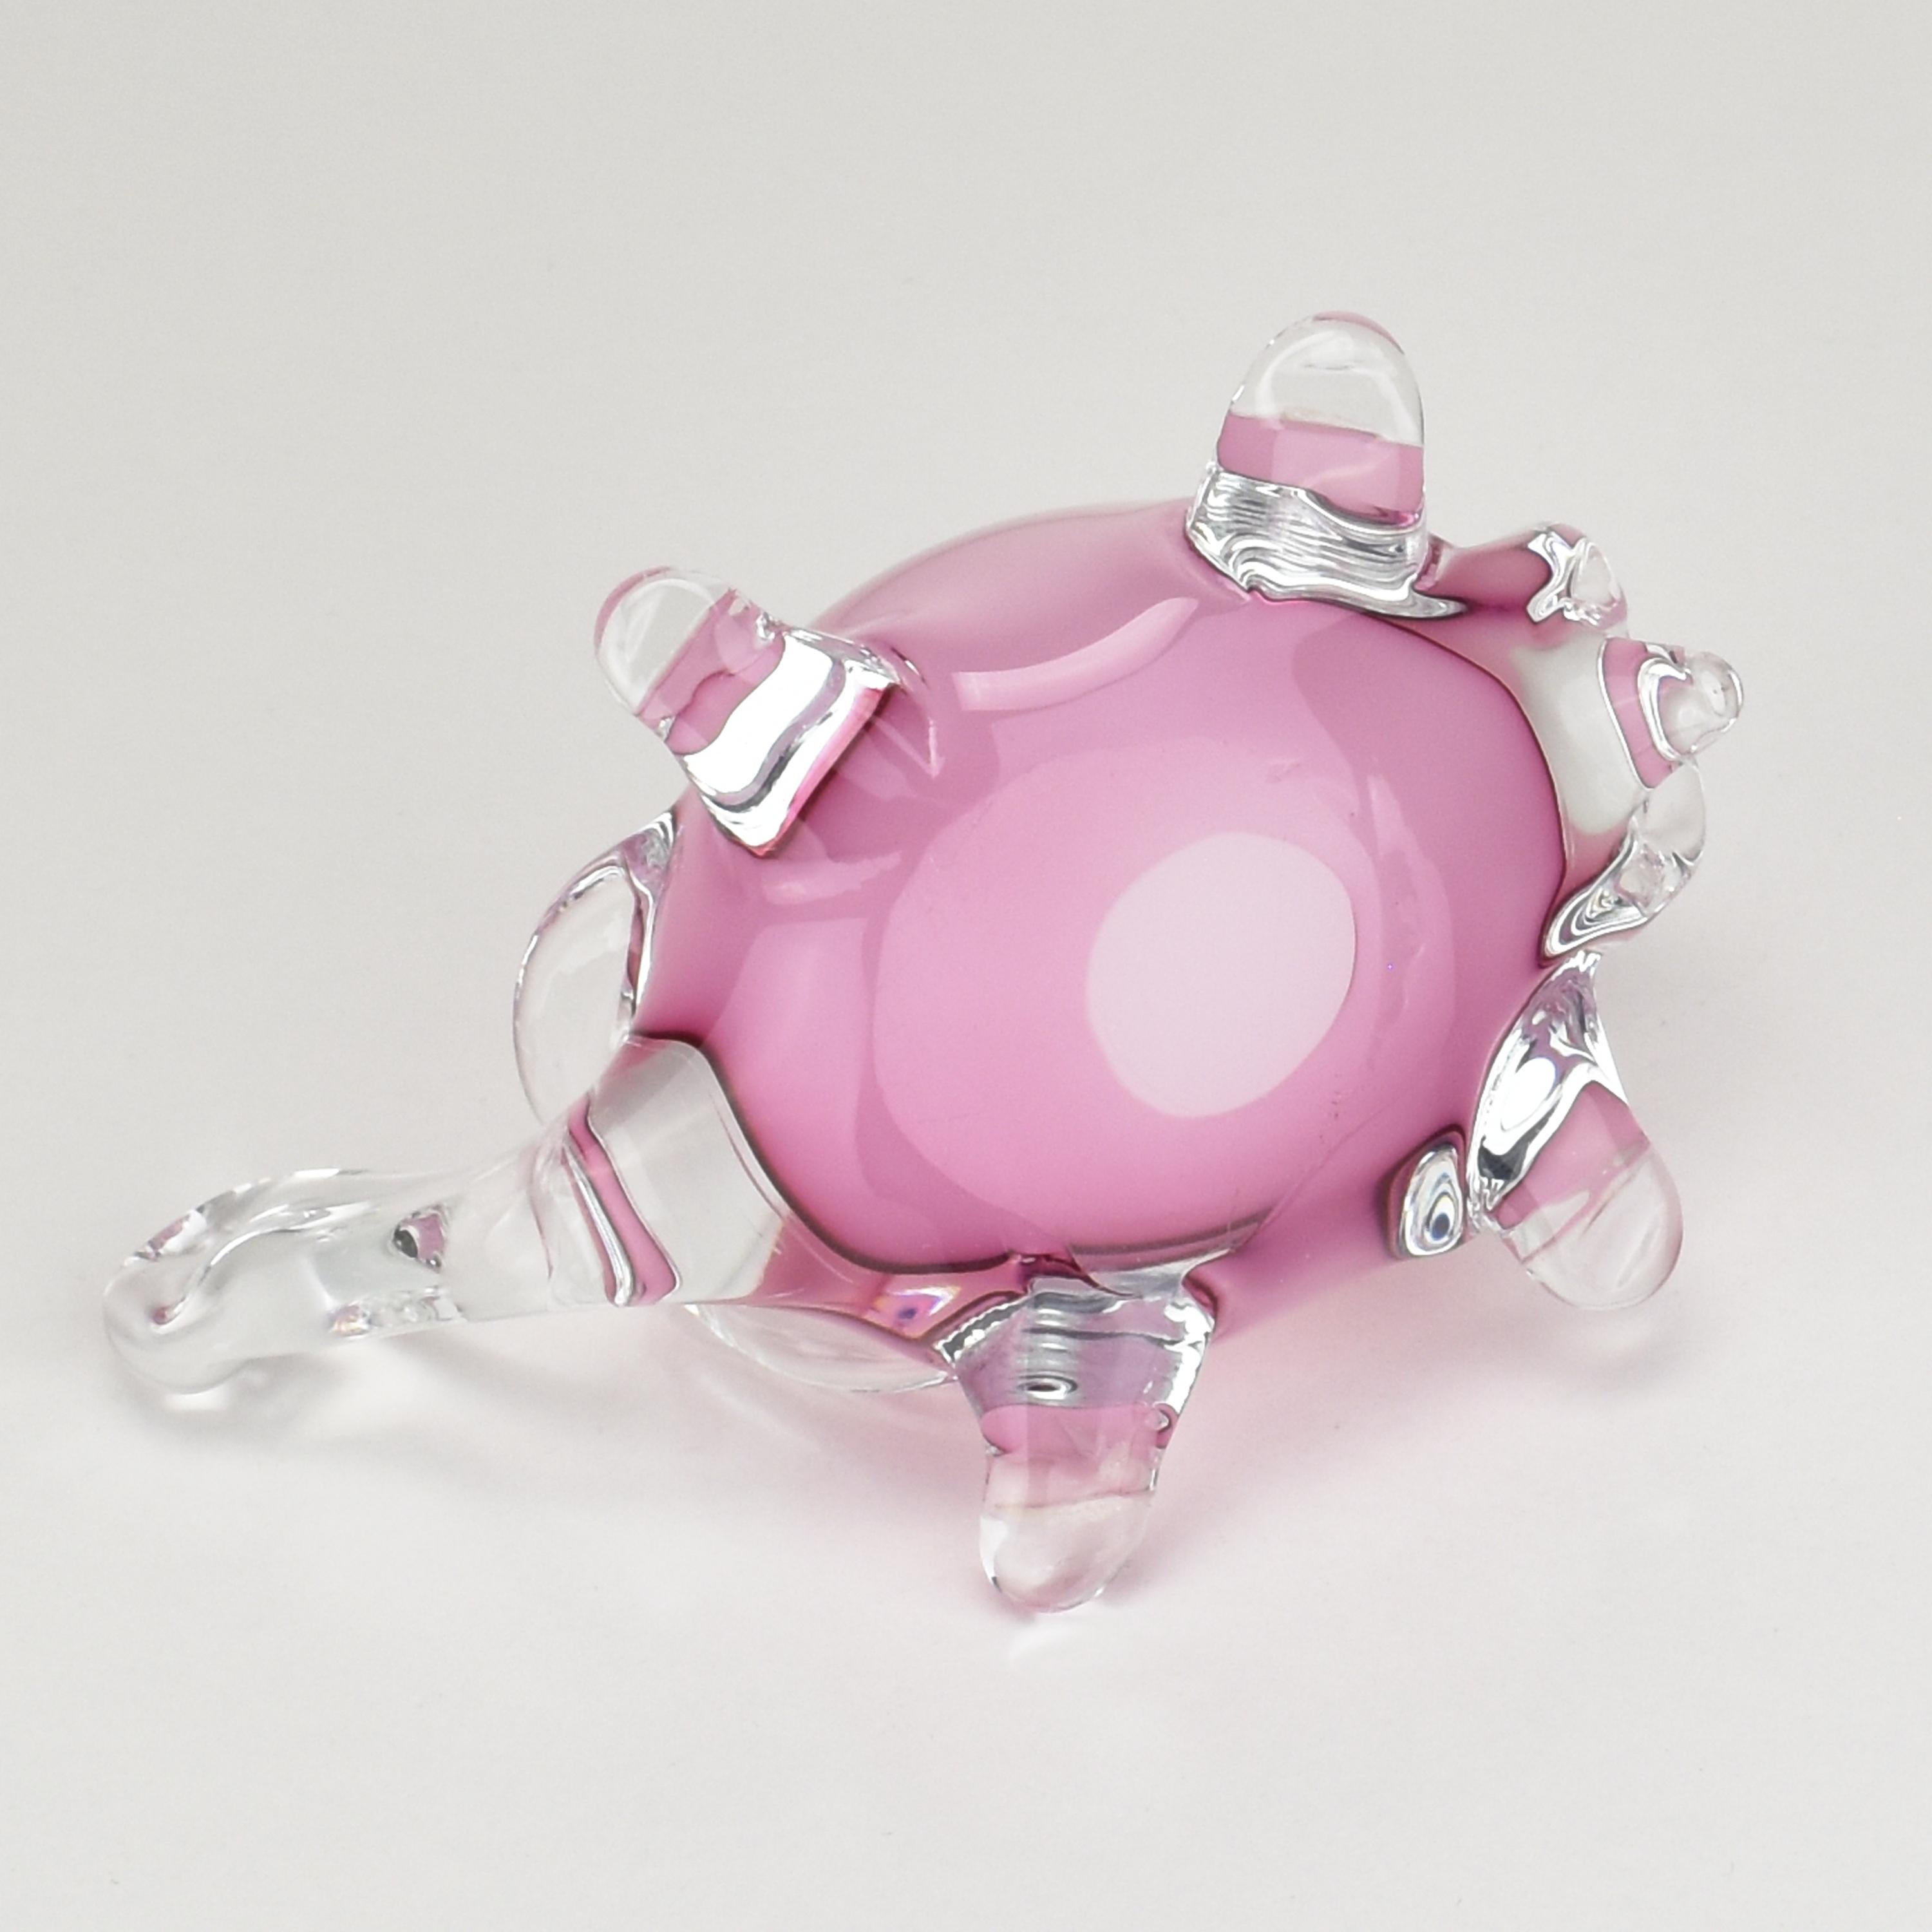 Seguso Tortoise Turtle Figurine Sculpture Pink Alabastro Murano Studio Art Glass In Good Condition For Sale In Bad Säckingen, DE